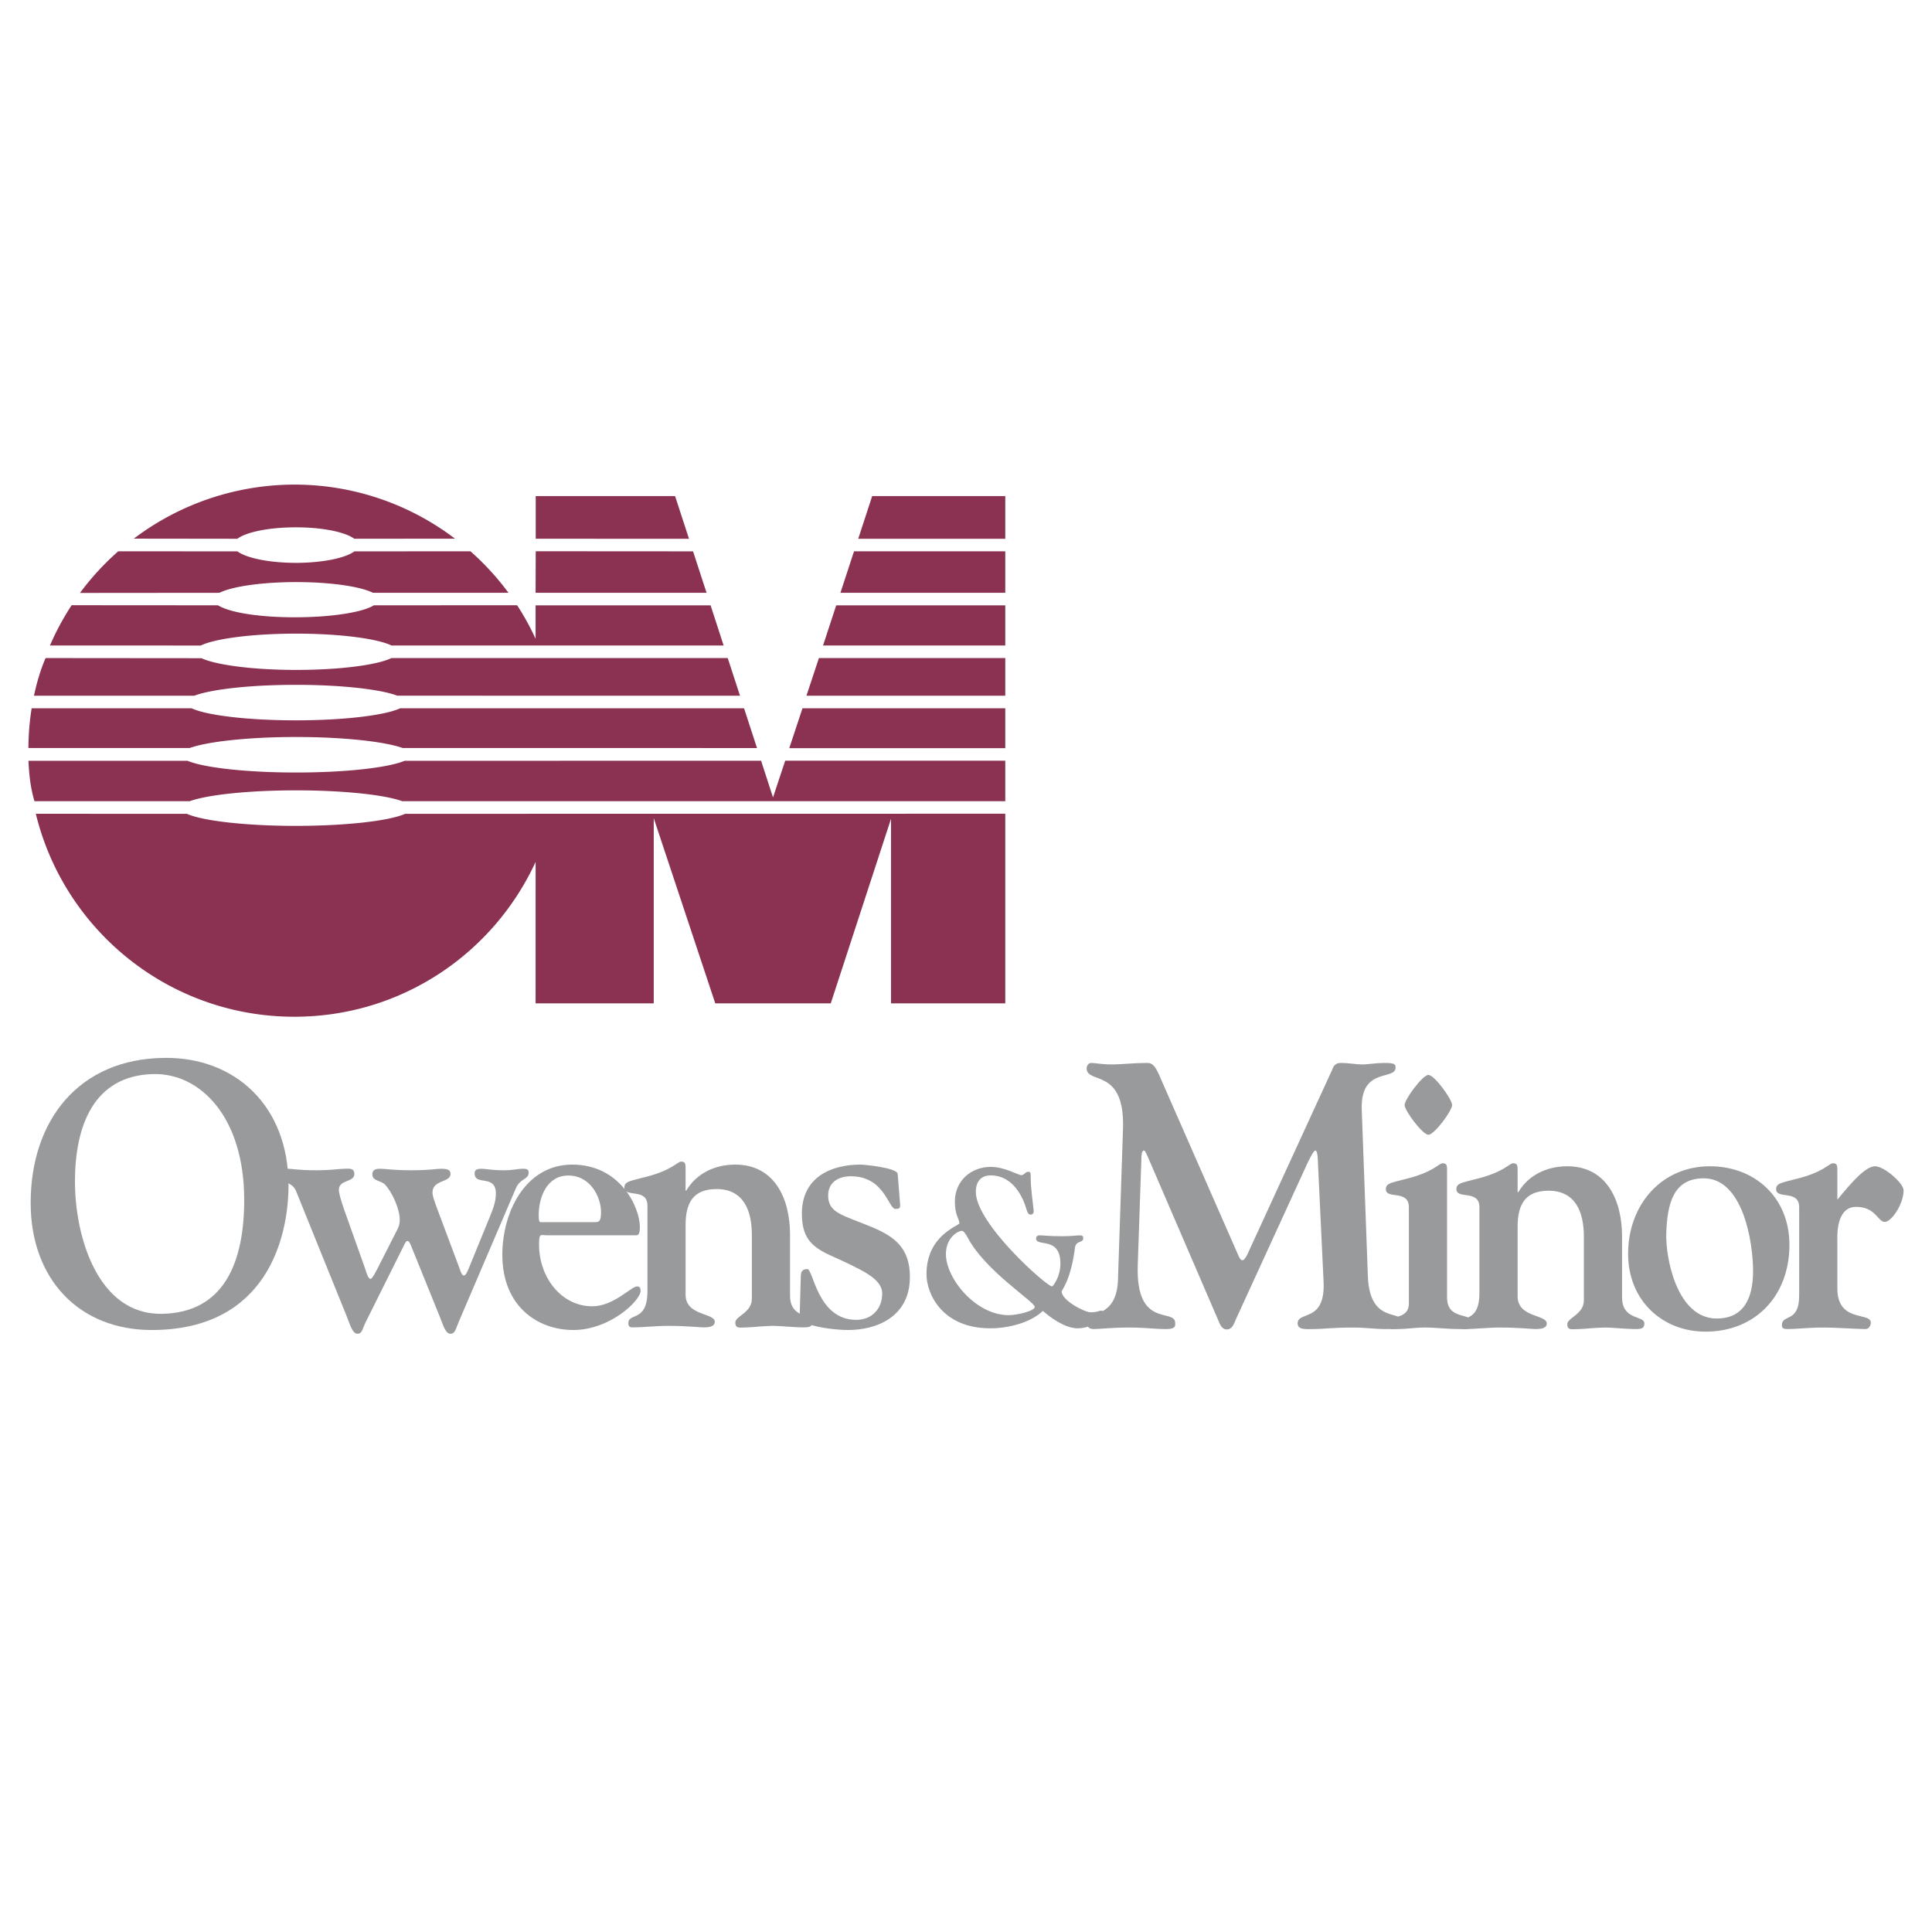 Owens & Minor logo colors